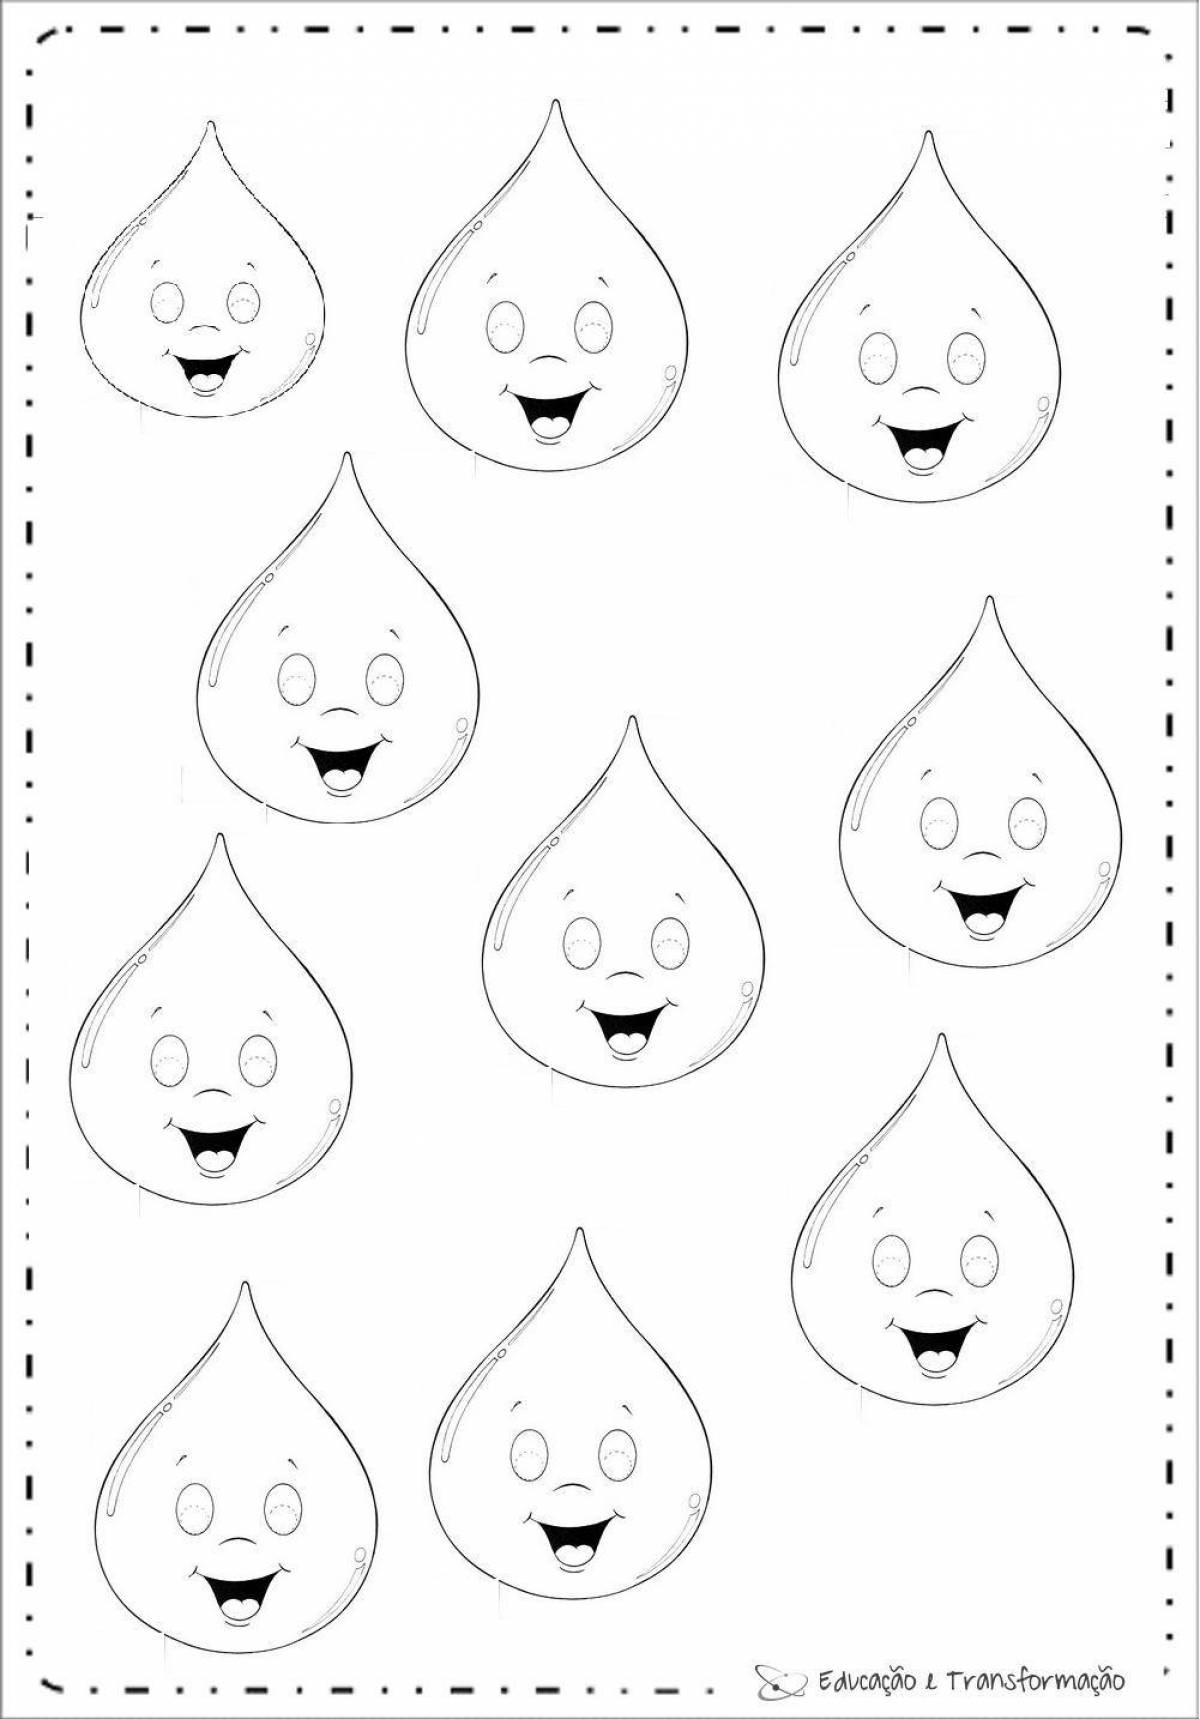 Joyful water drop coloring book for kids